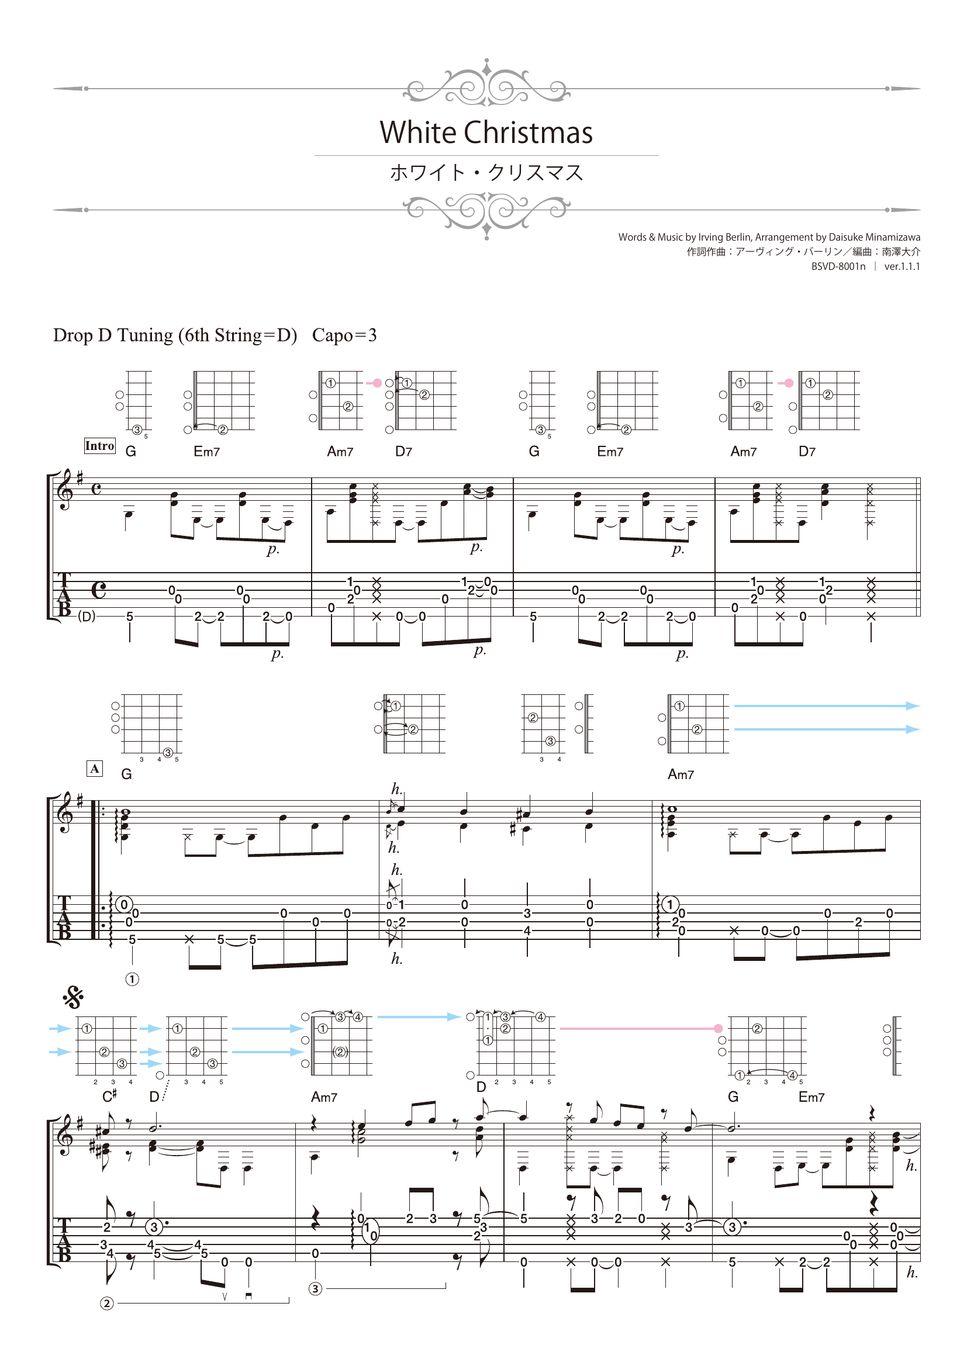 Irving Berlin - White Christmas (Solo Guitar) by Daisuke Minamizawa